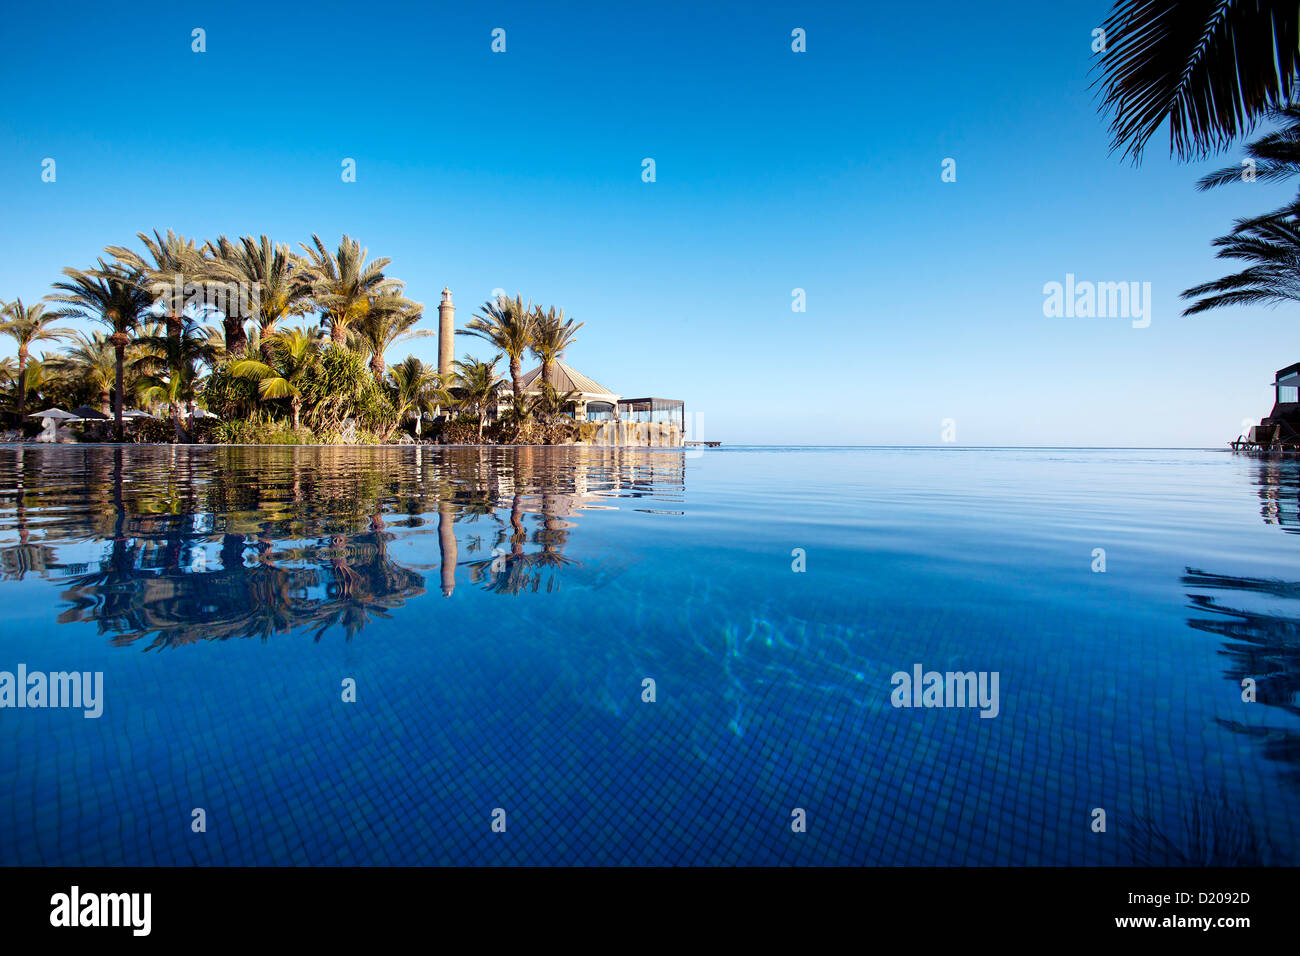 Pool of the Grand Hotel Costa under blue sky, Meloneras, Maspalomas, Gran Canaria, Canary Islands, Spain, Europe Stock Photo